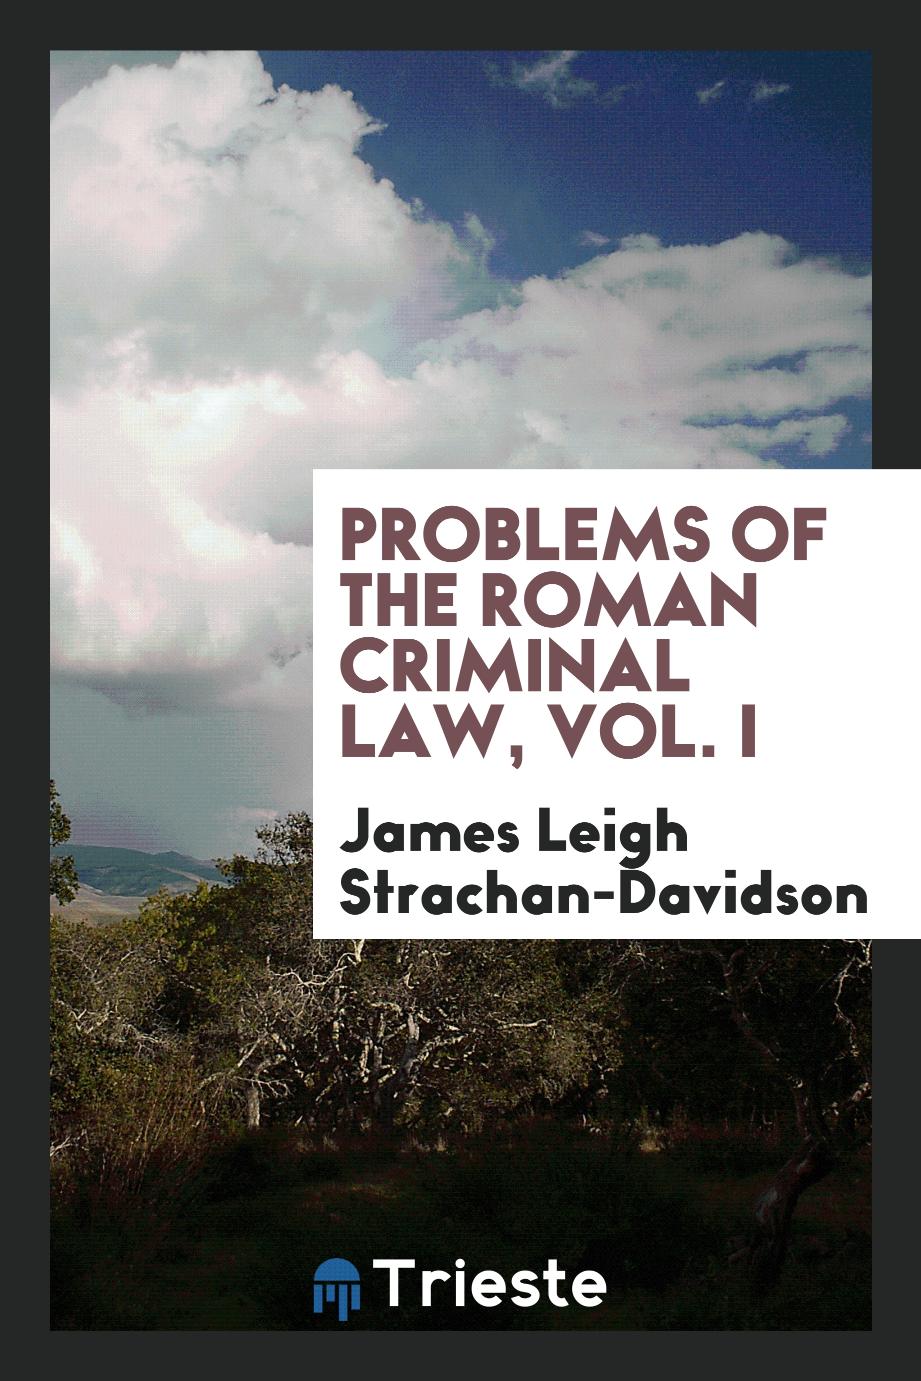 Problems of the Roman criminal law, Vol. I